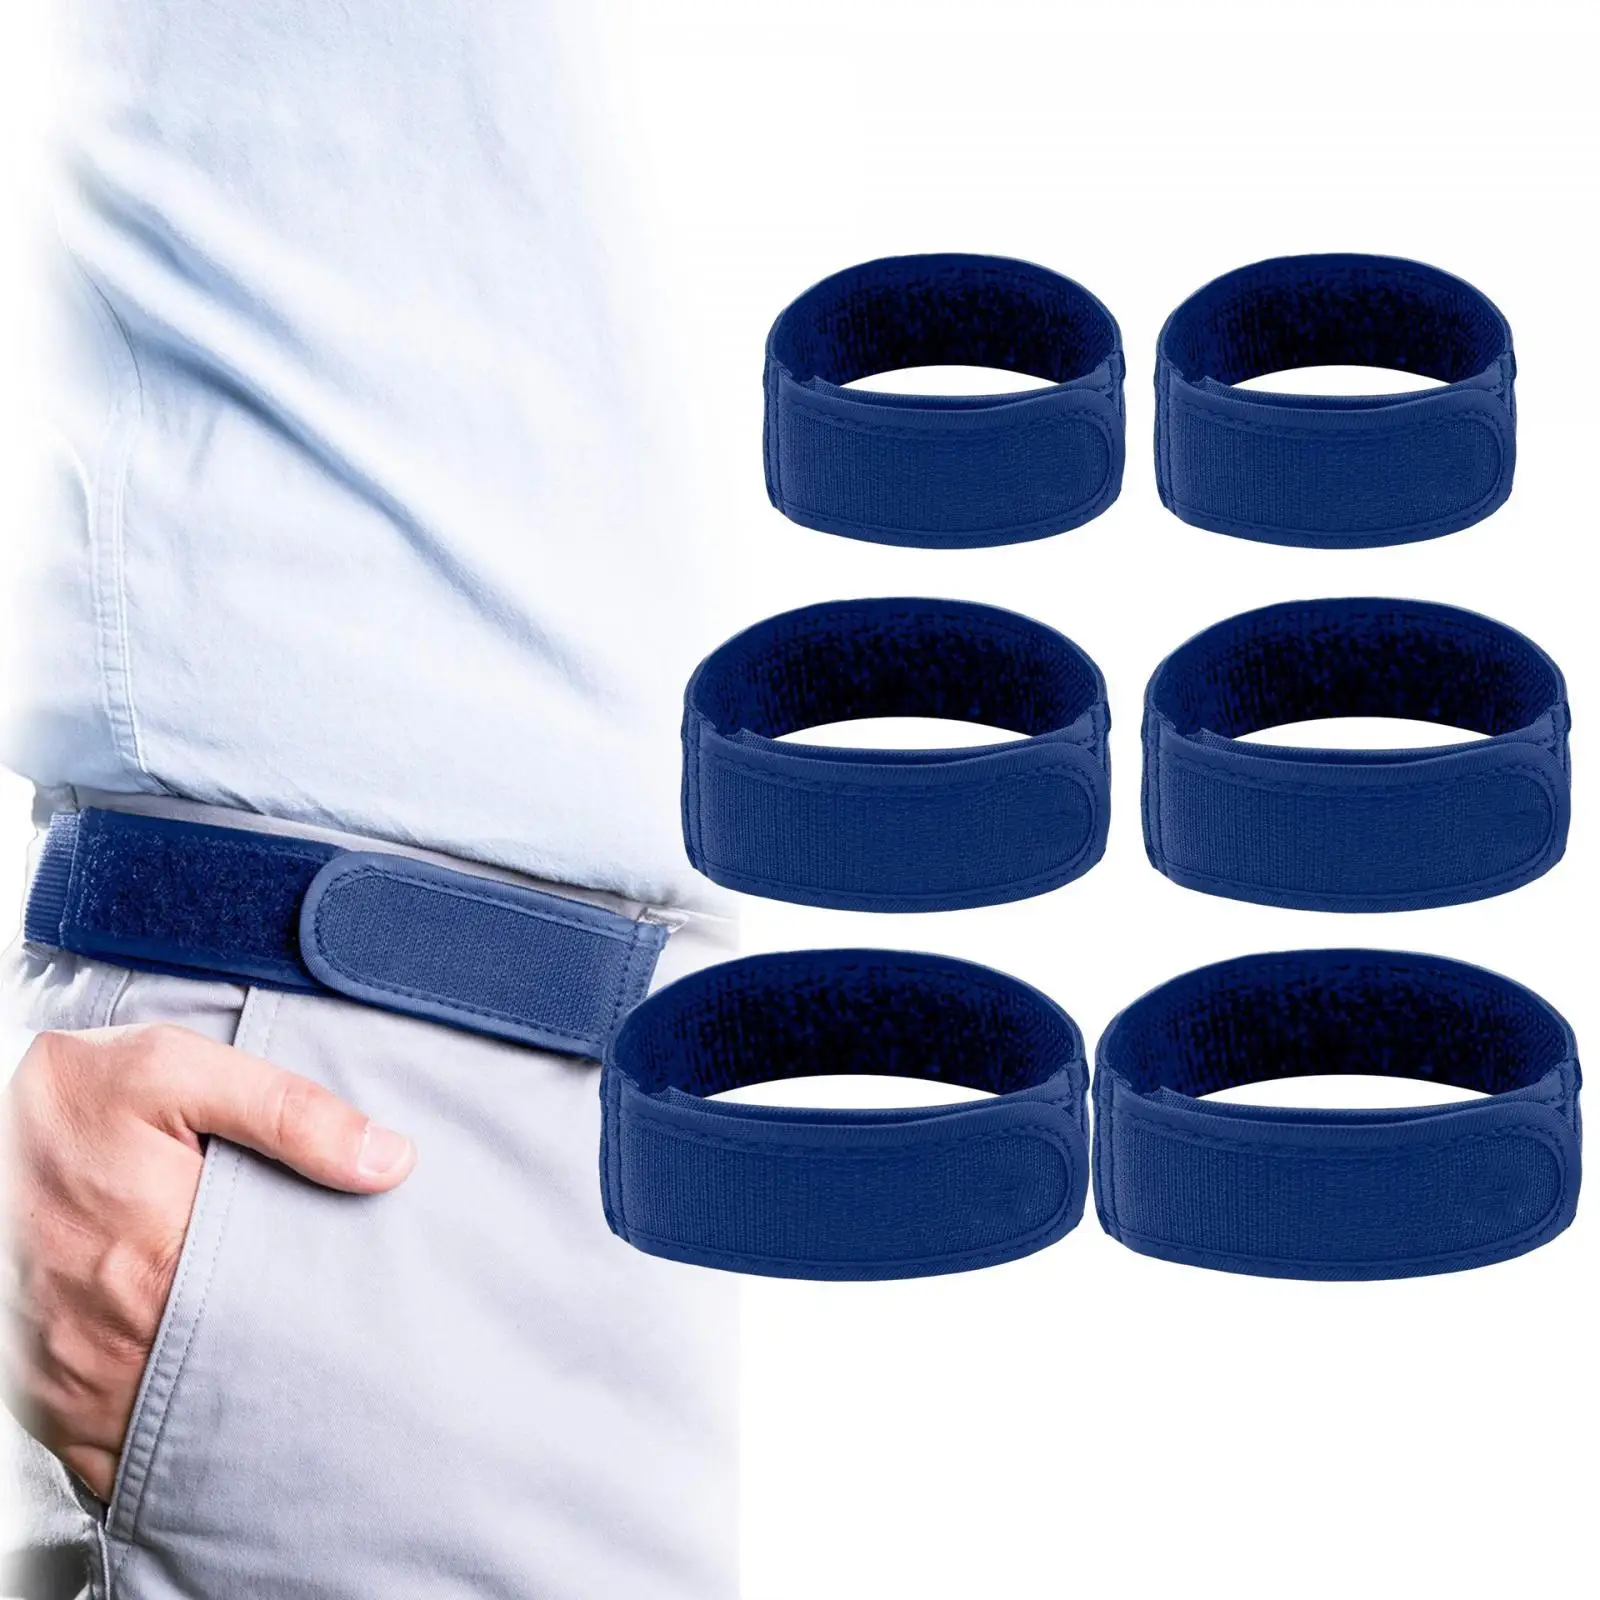 2Pcs Buckle Free Waist Belts No Buckle Elastic Belts for 1.5 inch Belt Loops